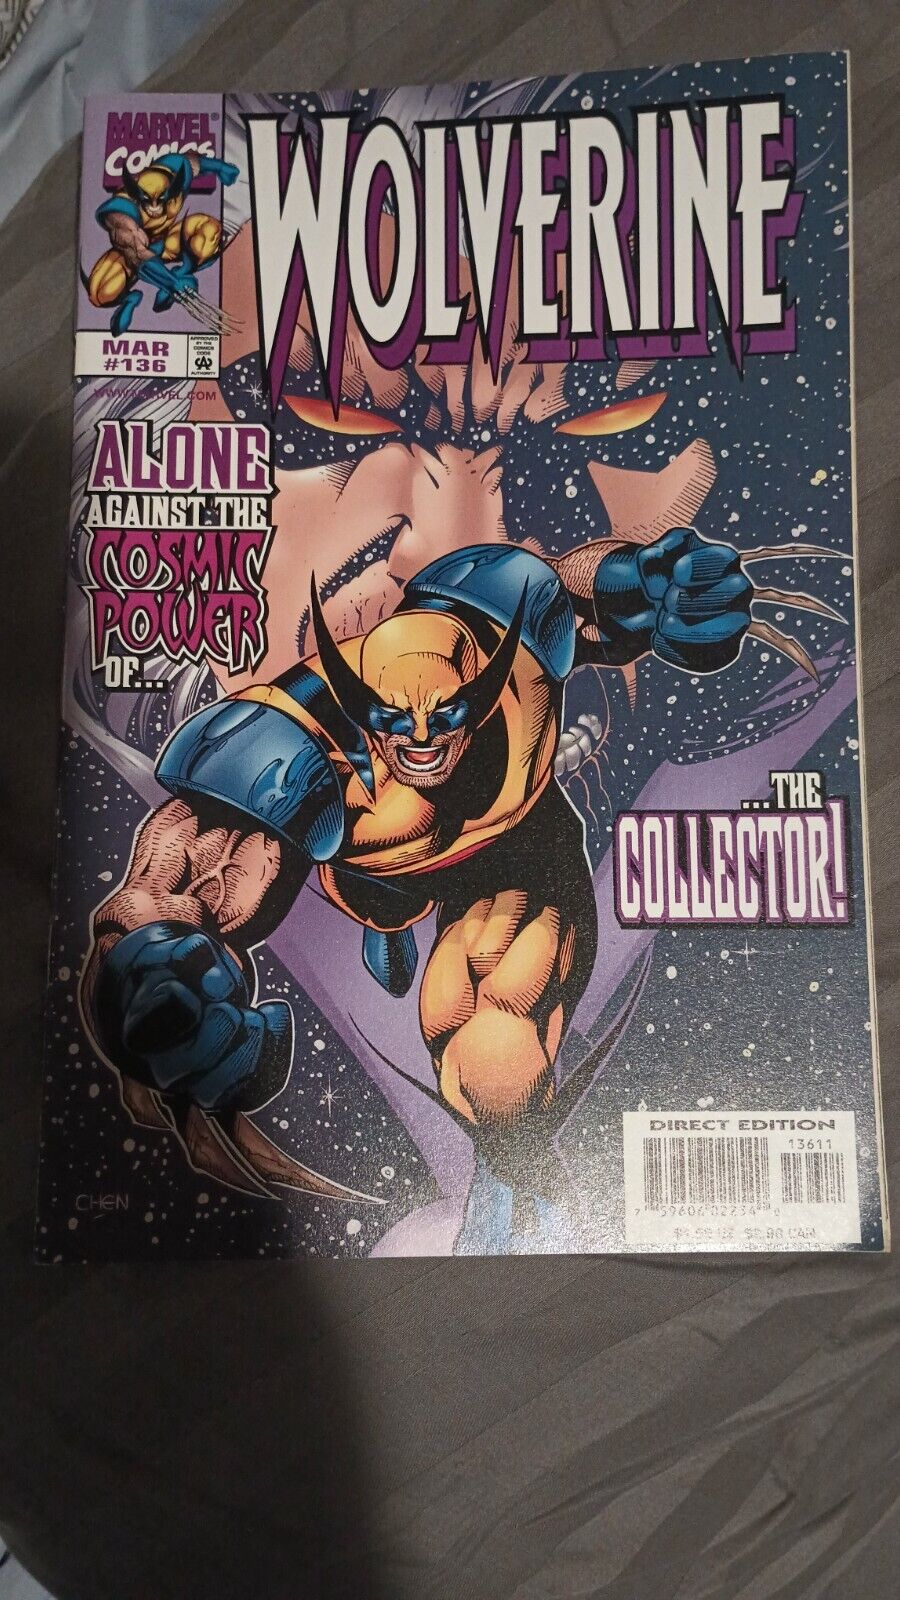 Wolverine #136 (Marvel Comics March 1999)